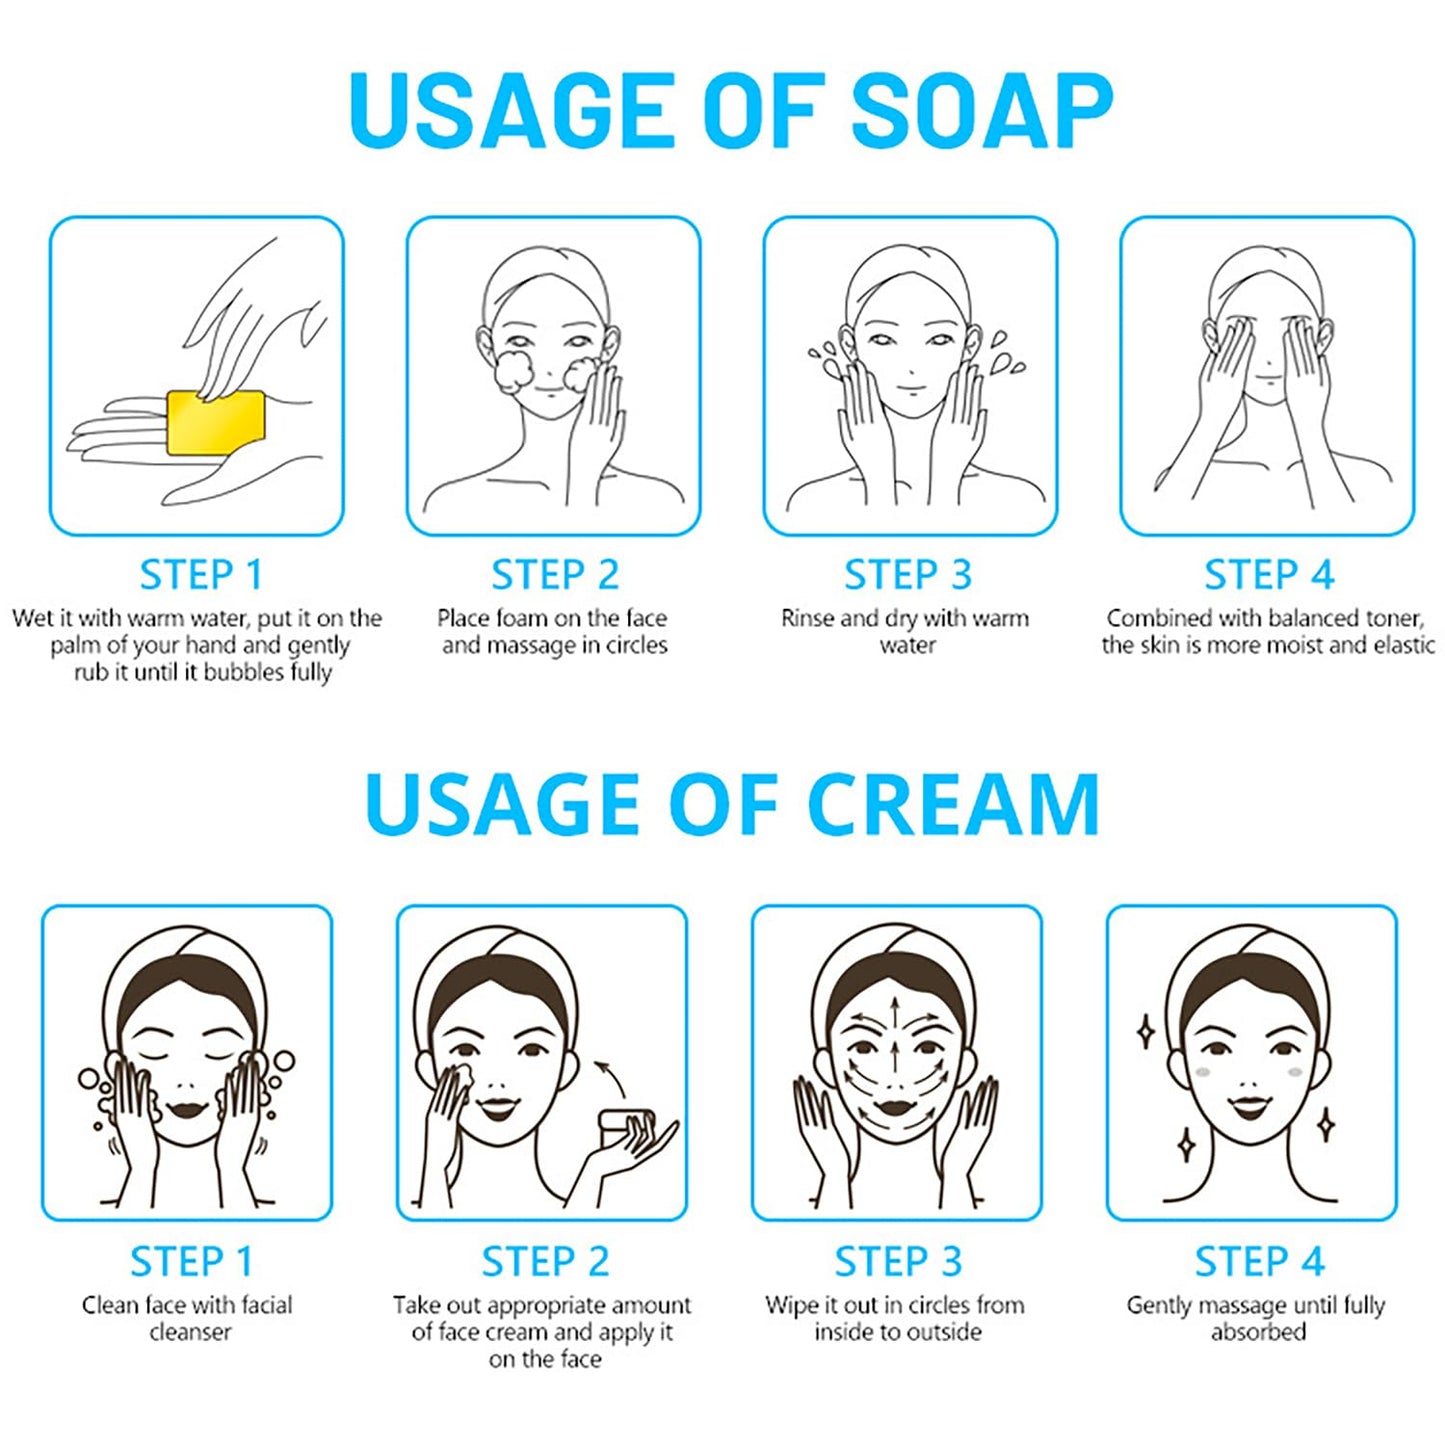 DISAAR Beauty Honey Milk Soap Moisturizing Cleanses Pores Repair Skin Reduces Wrinkles Restore 120g / 4.23oz